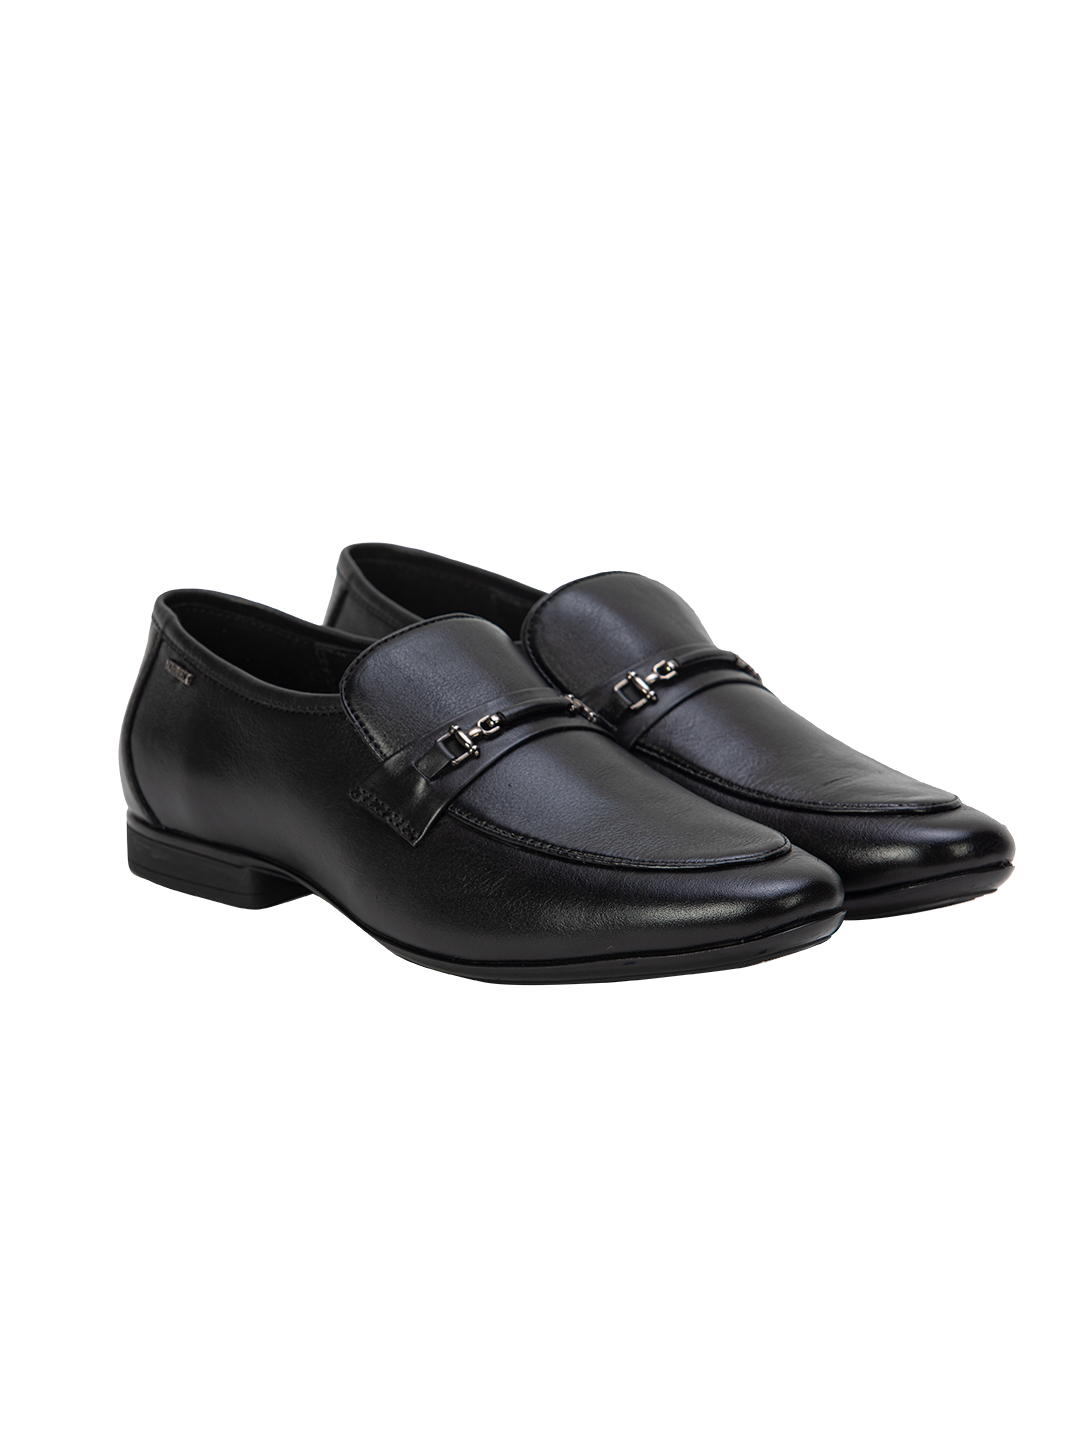 Buy Von Wellx Germany Comfort Black Glib Shoes Online in Riyadh